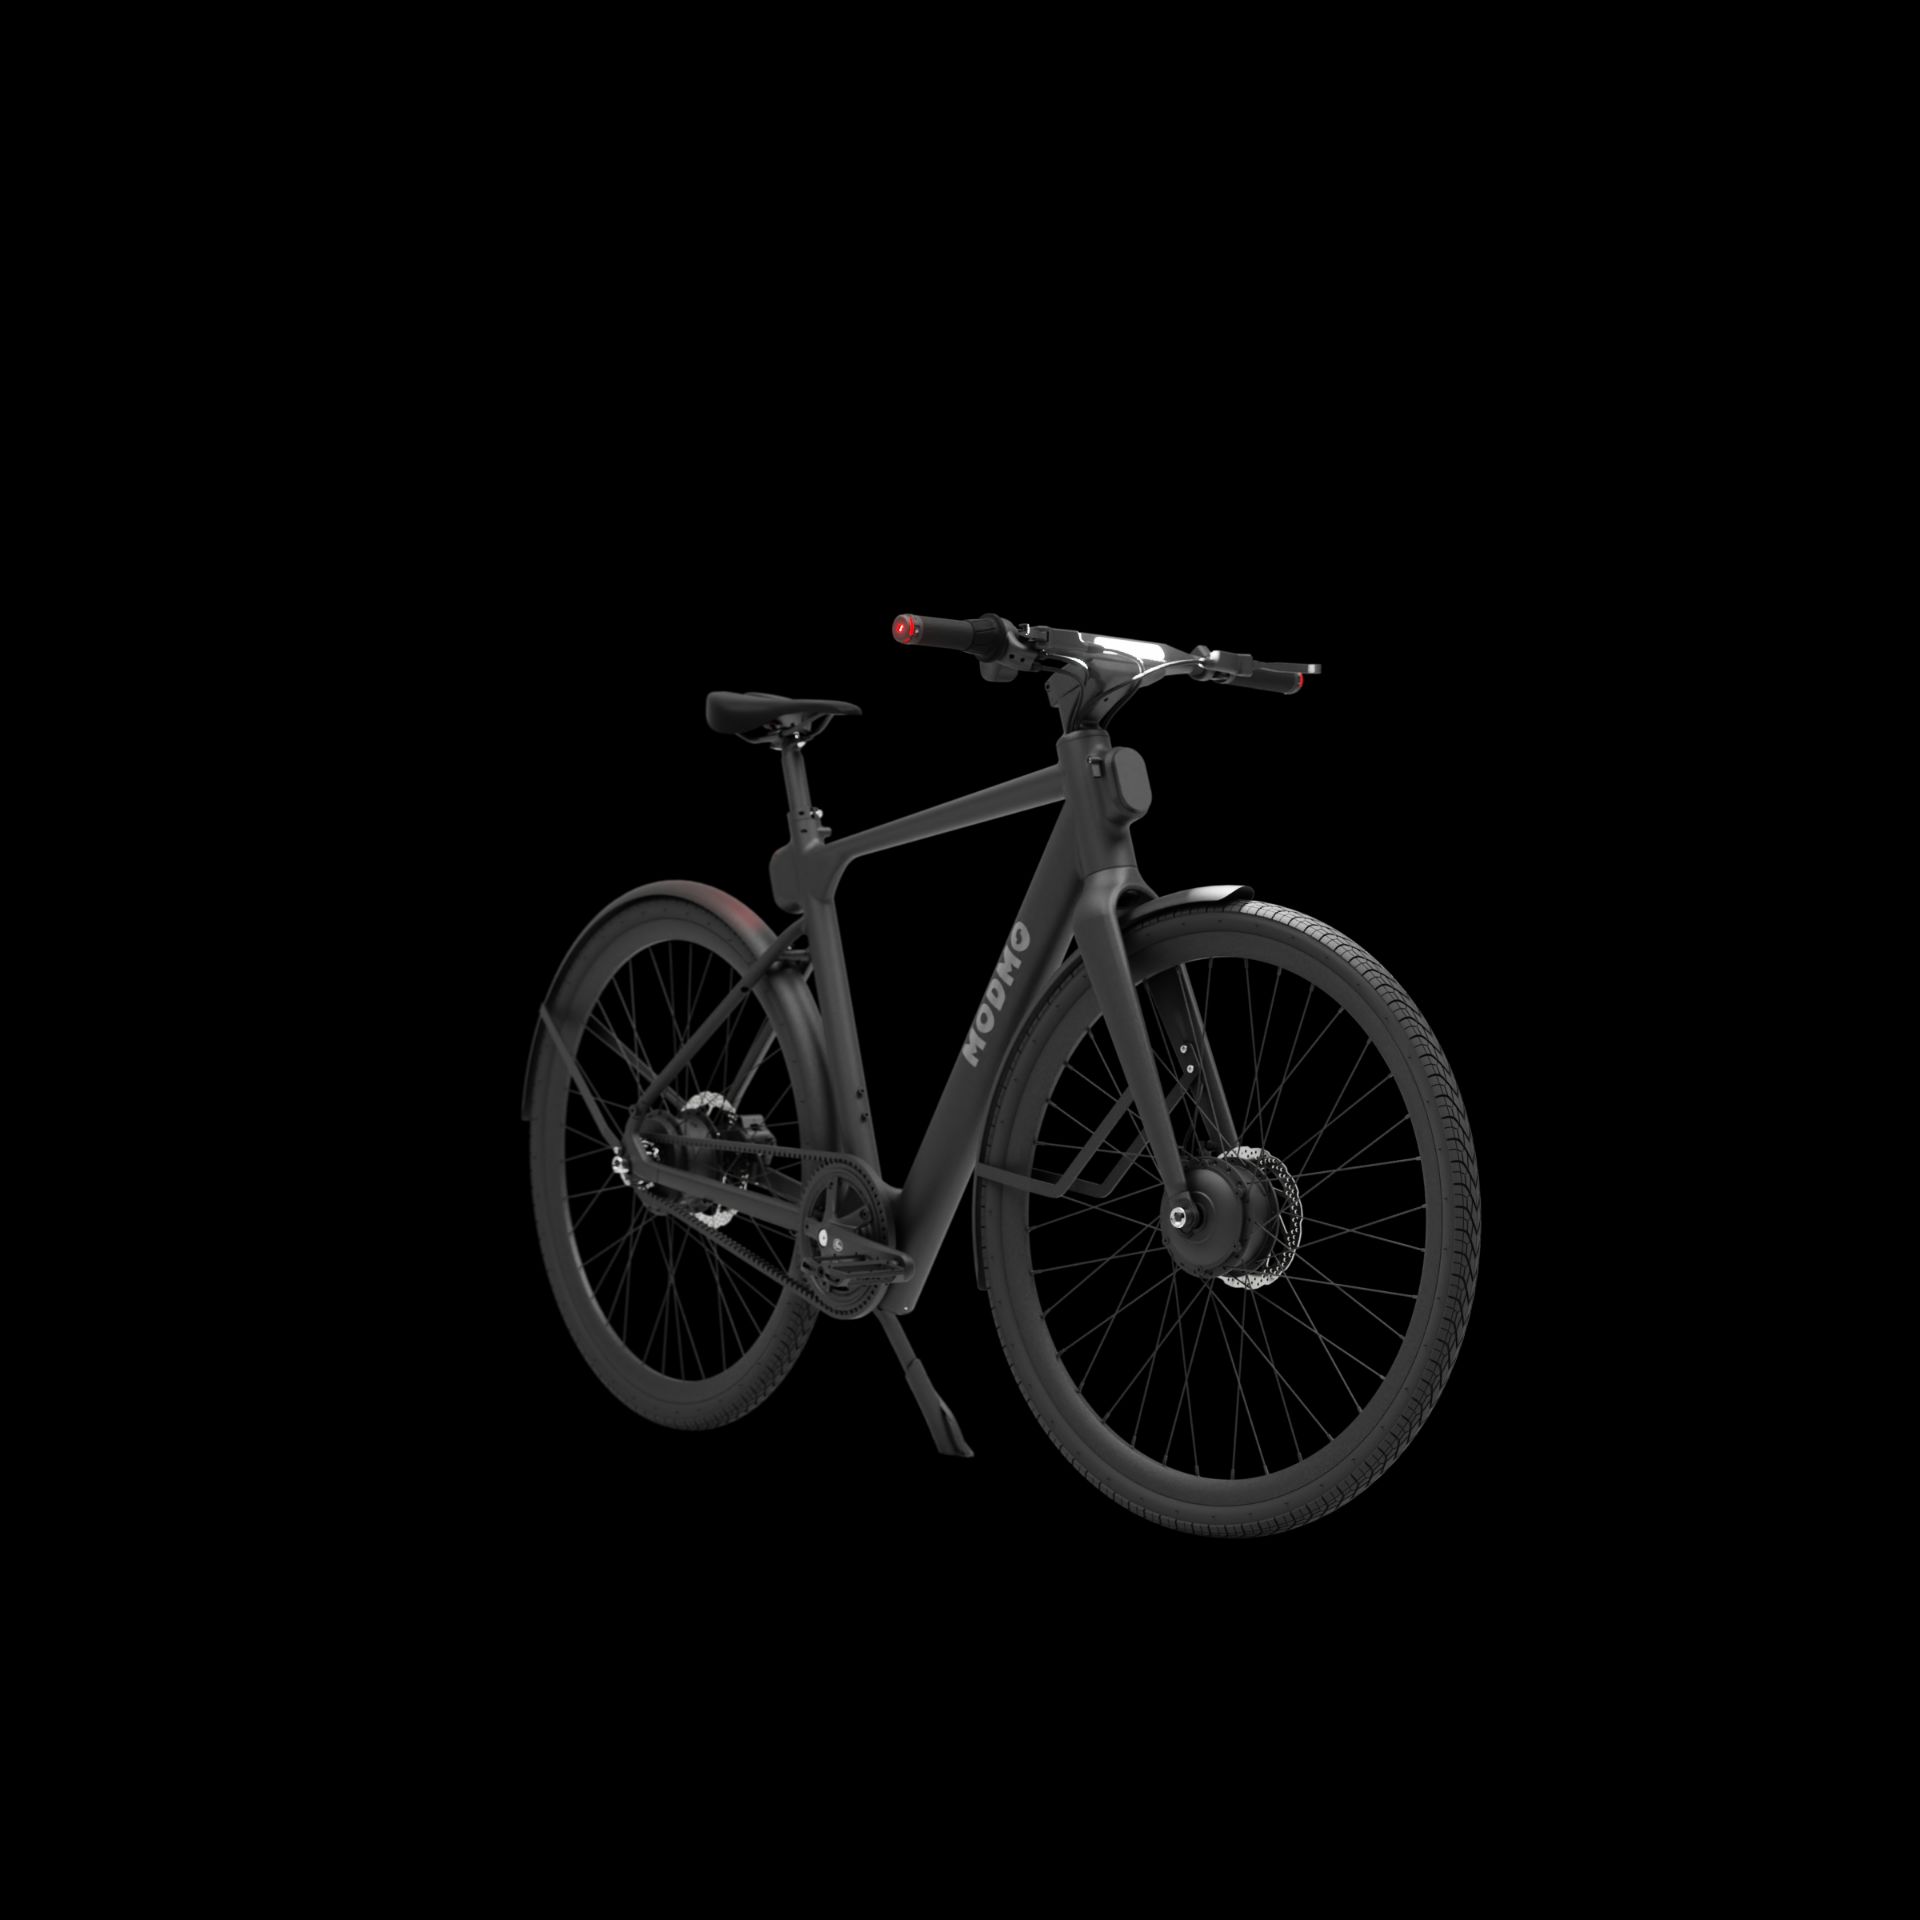 Modmo Saigon+ Electric Bicycle - RRP £2800 - Size M (Rider: 140-155cm) - Image 8 of 14